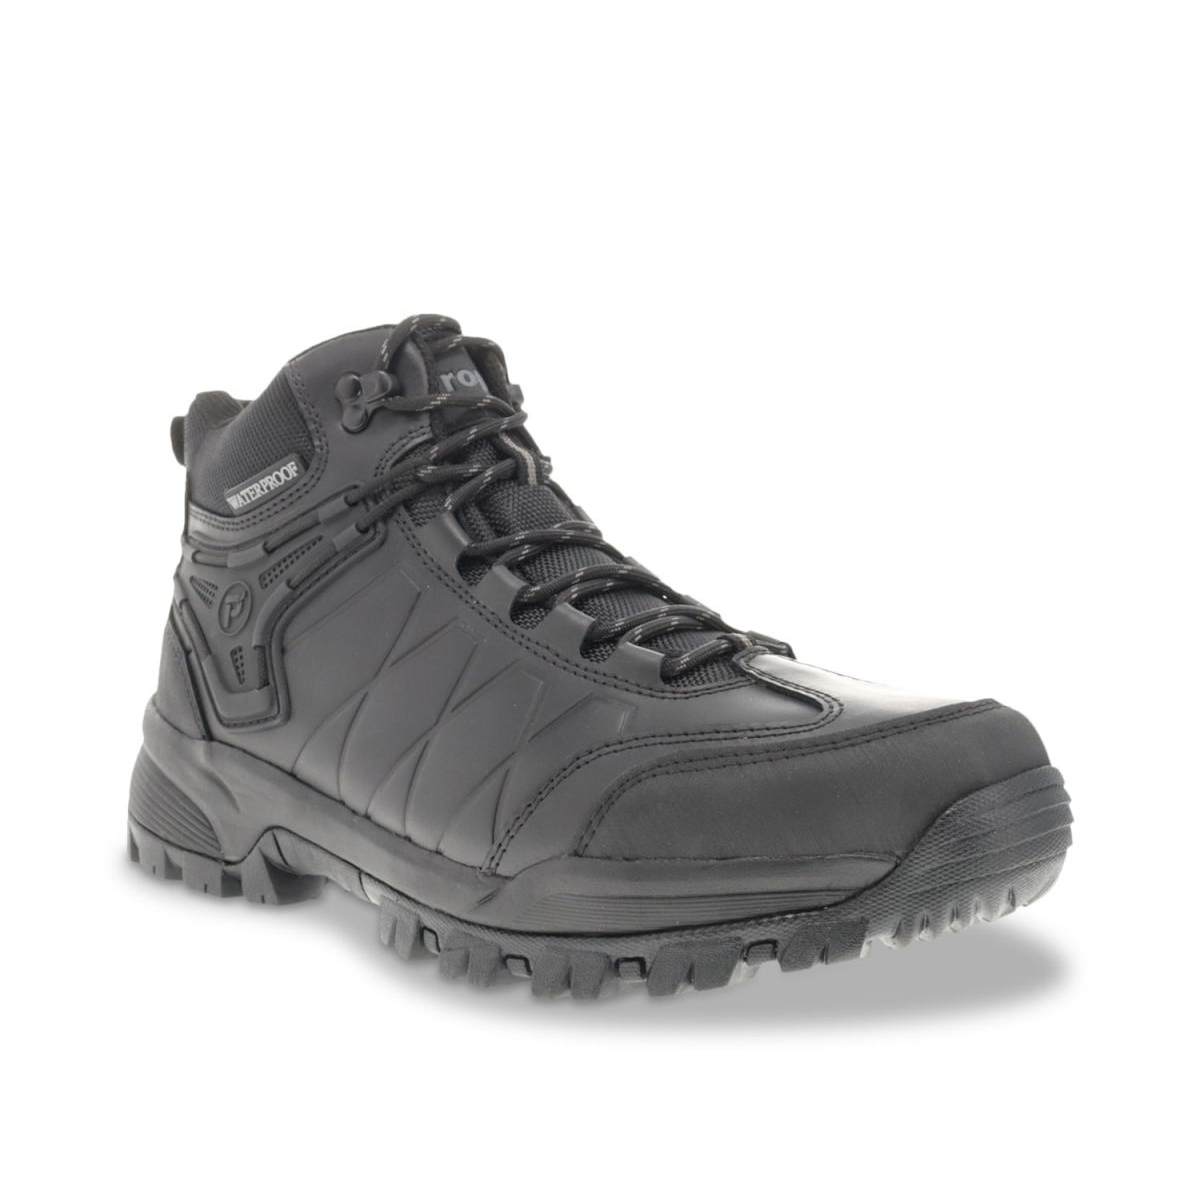 Propet Men's Ridge Walker Force Hiking Boots Black - MBA052LBLK BLACK - BLACK, 14 WIDE